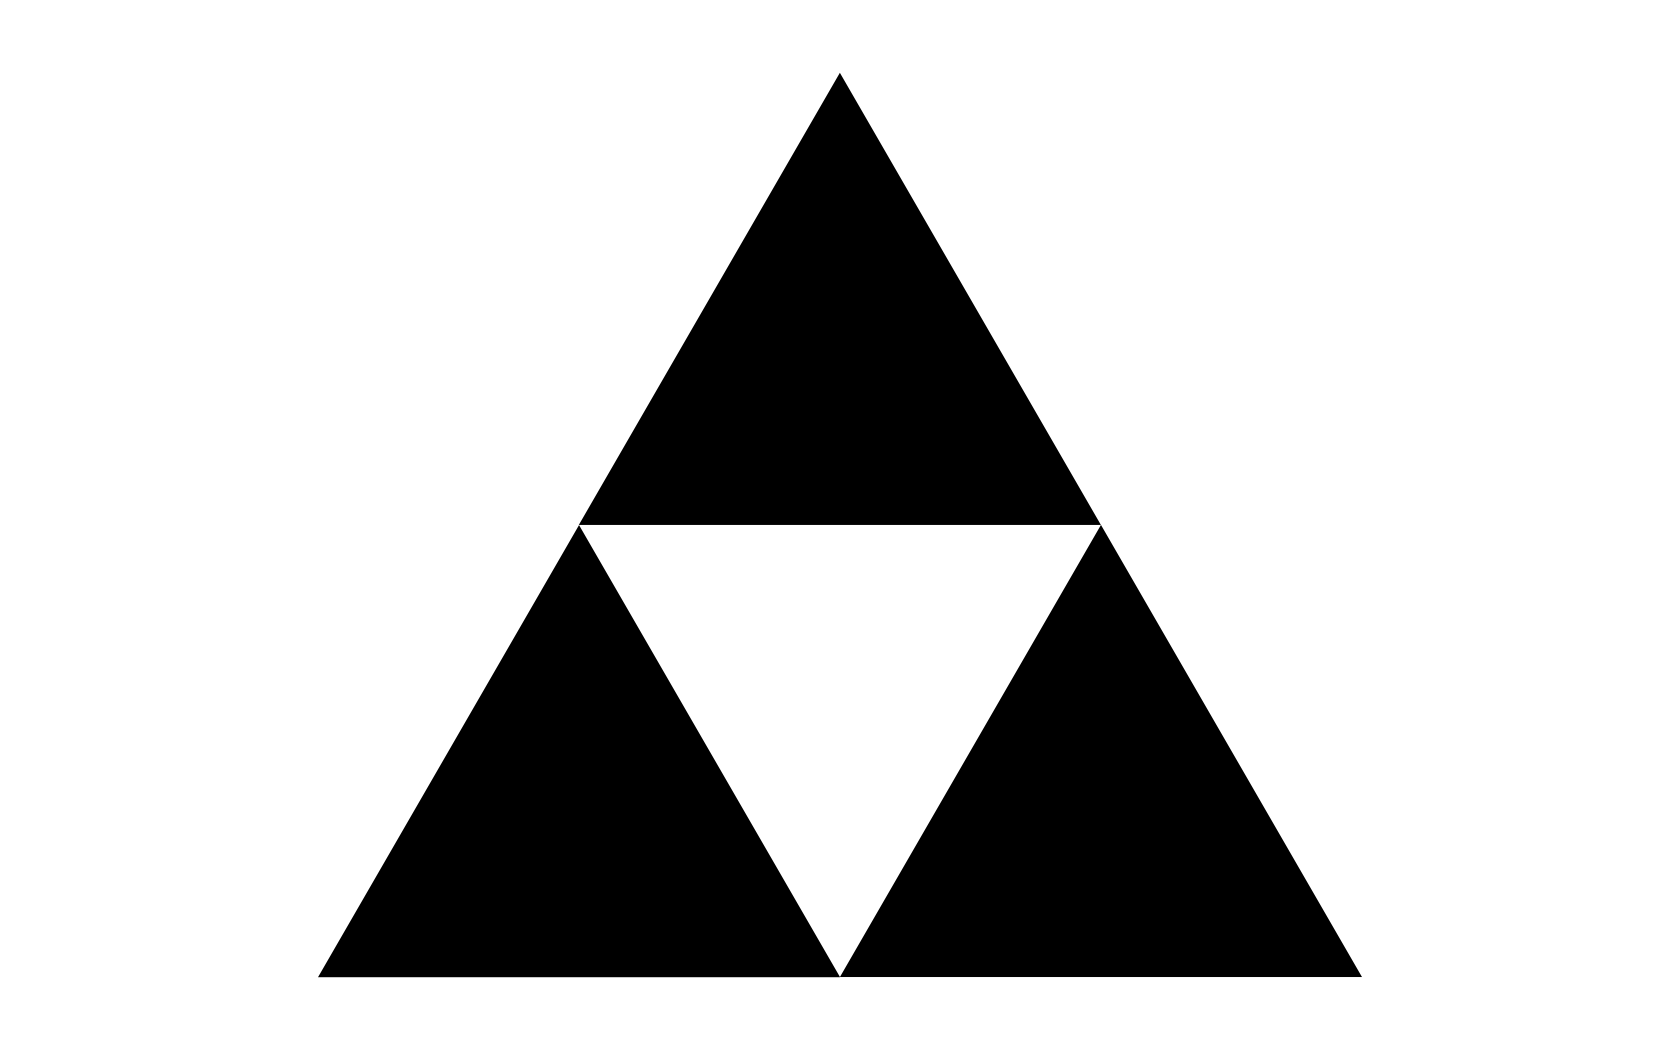 General 1680x1050 The Legend of Zelda simple background video games minimalism Triforce white background monochrome triangle geometric figures black